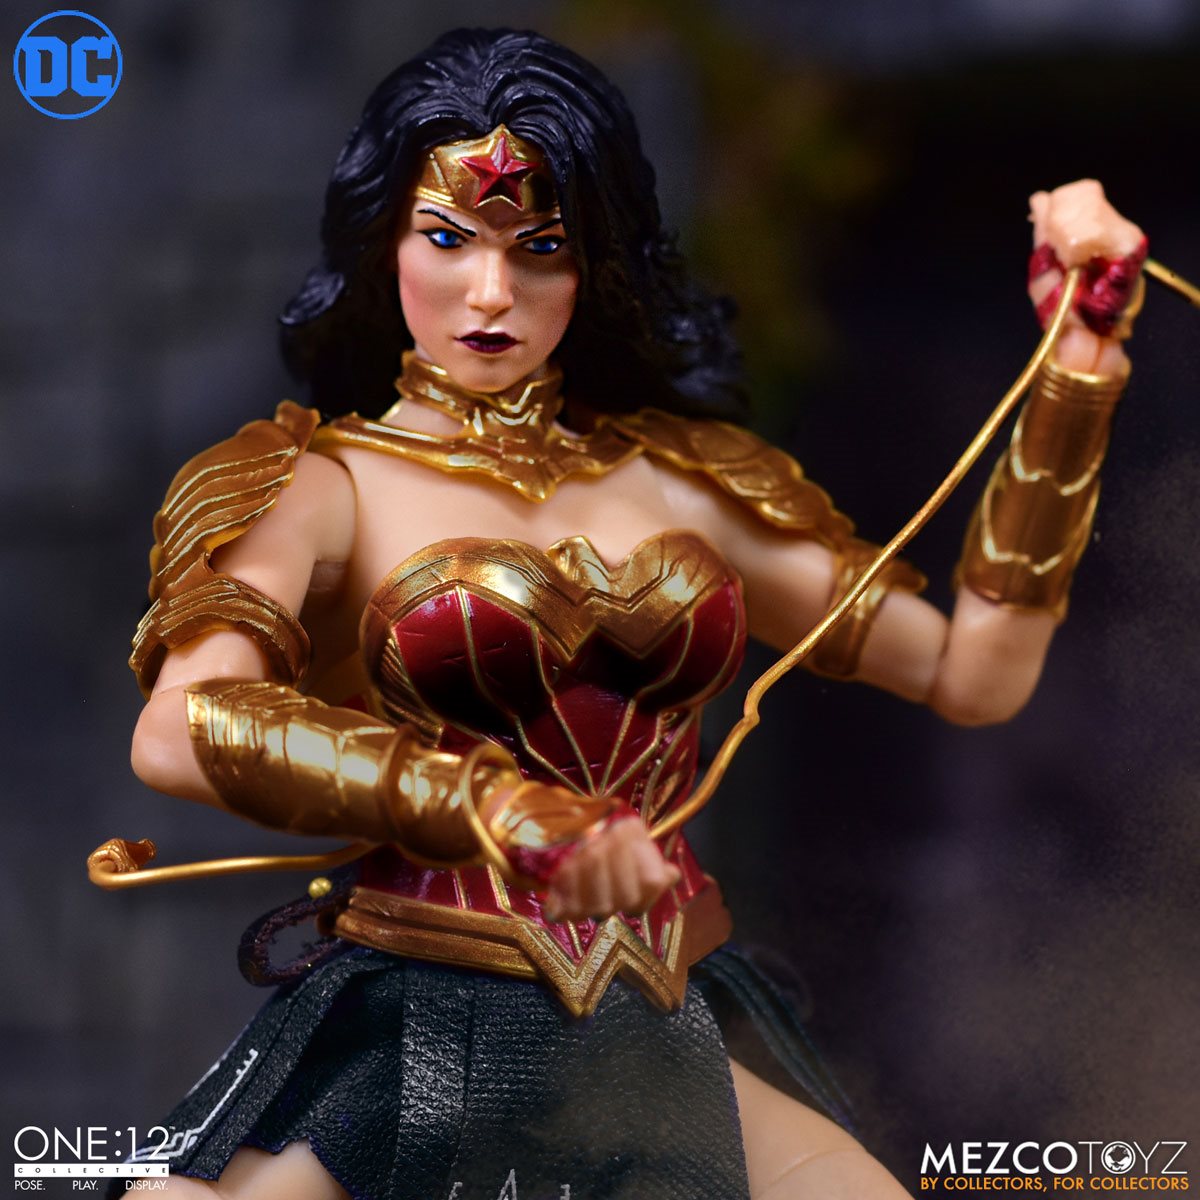 Mezco Toyz Ant 1:12 DC Justice League Wonder Woman PX limited edition handmade